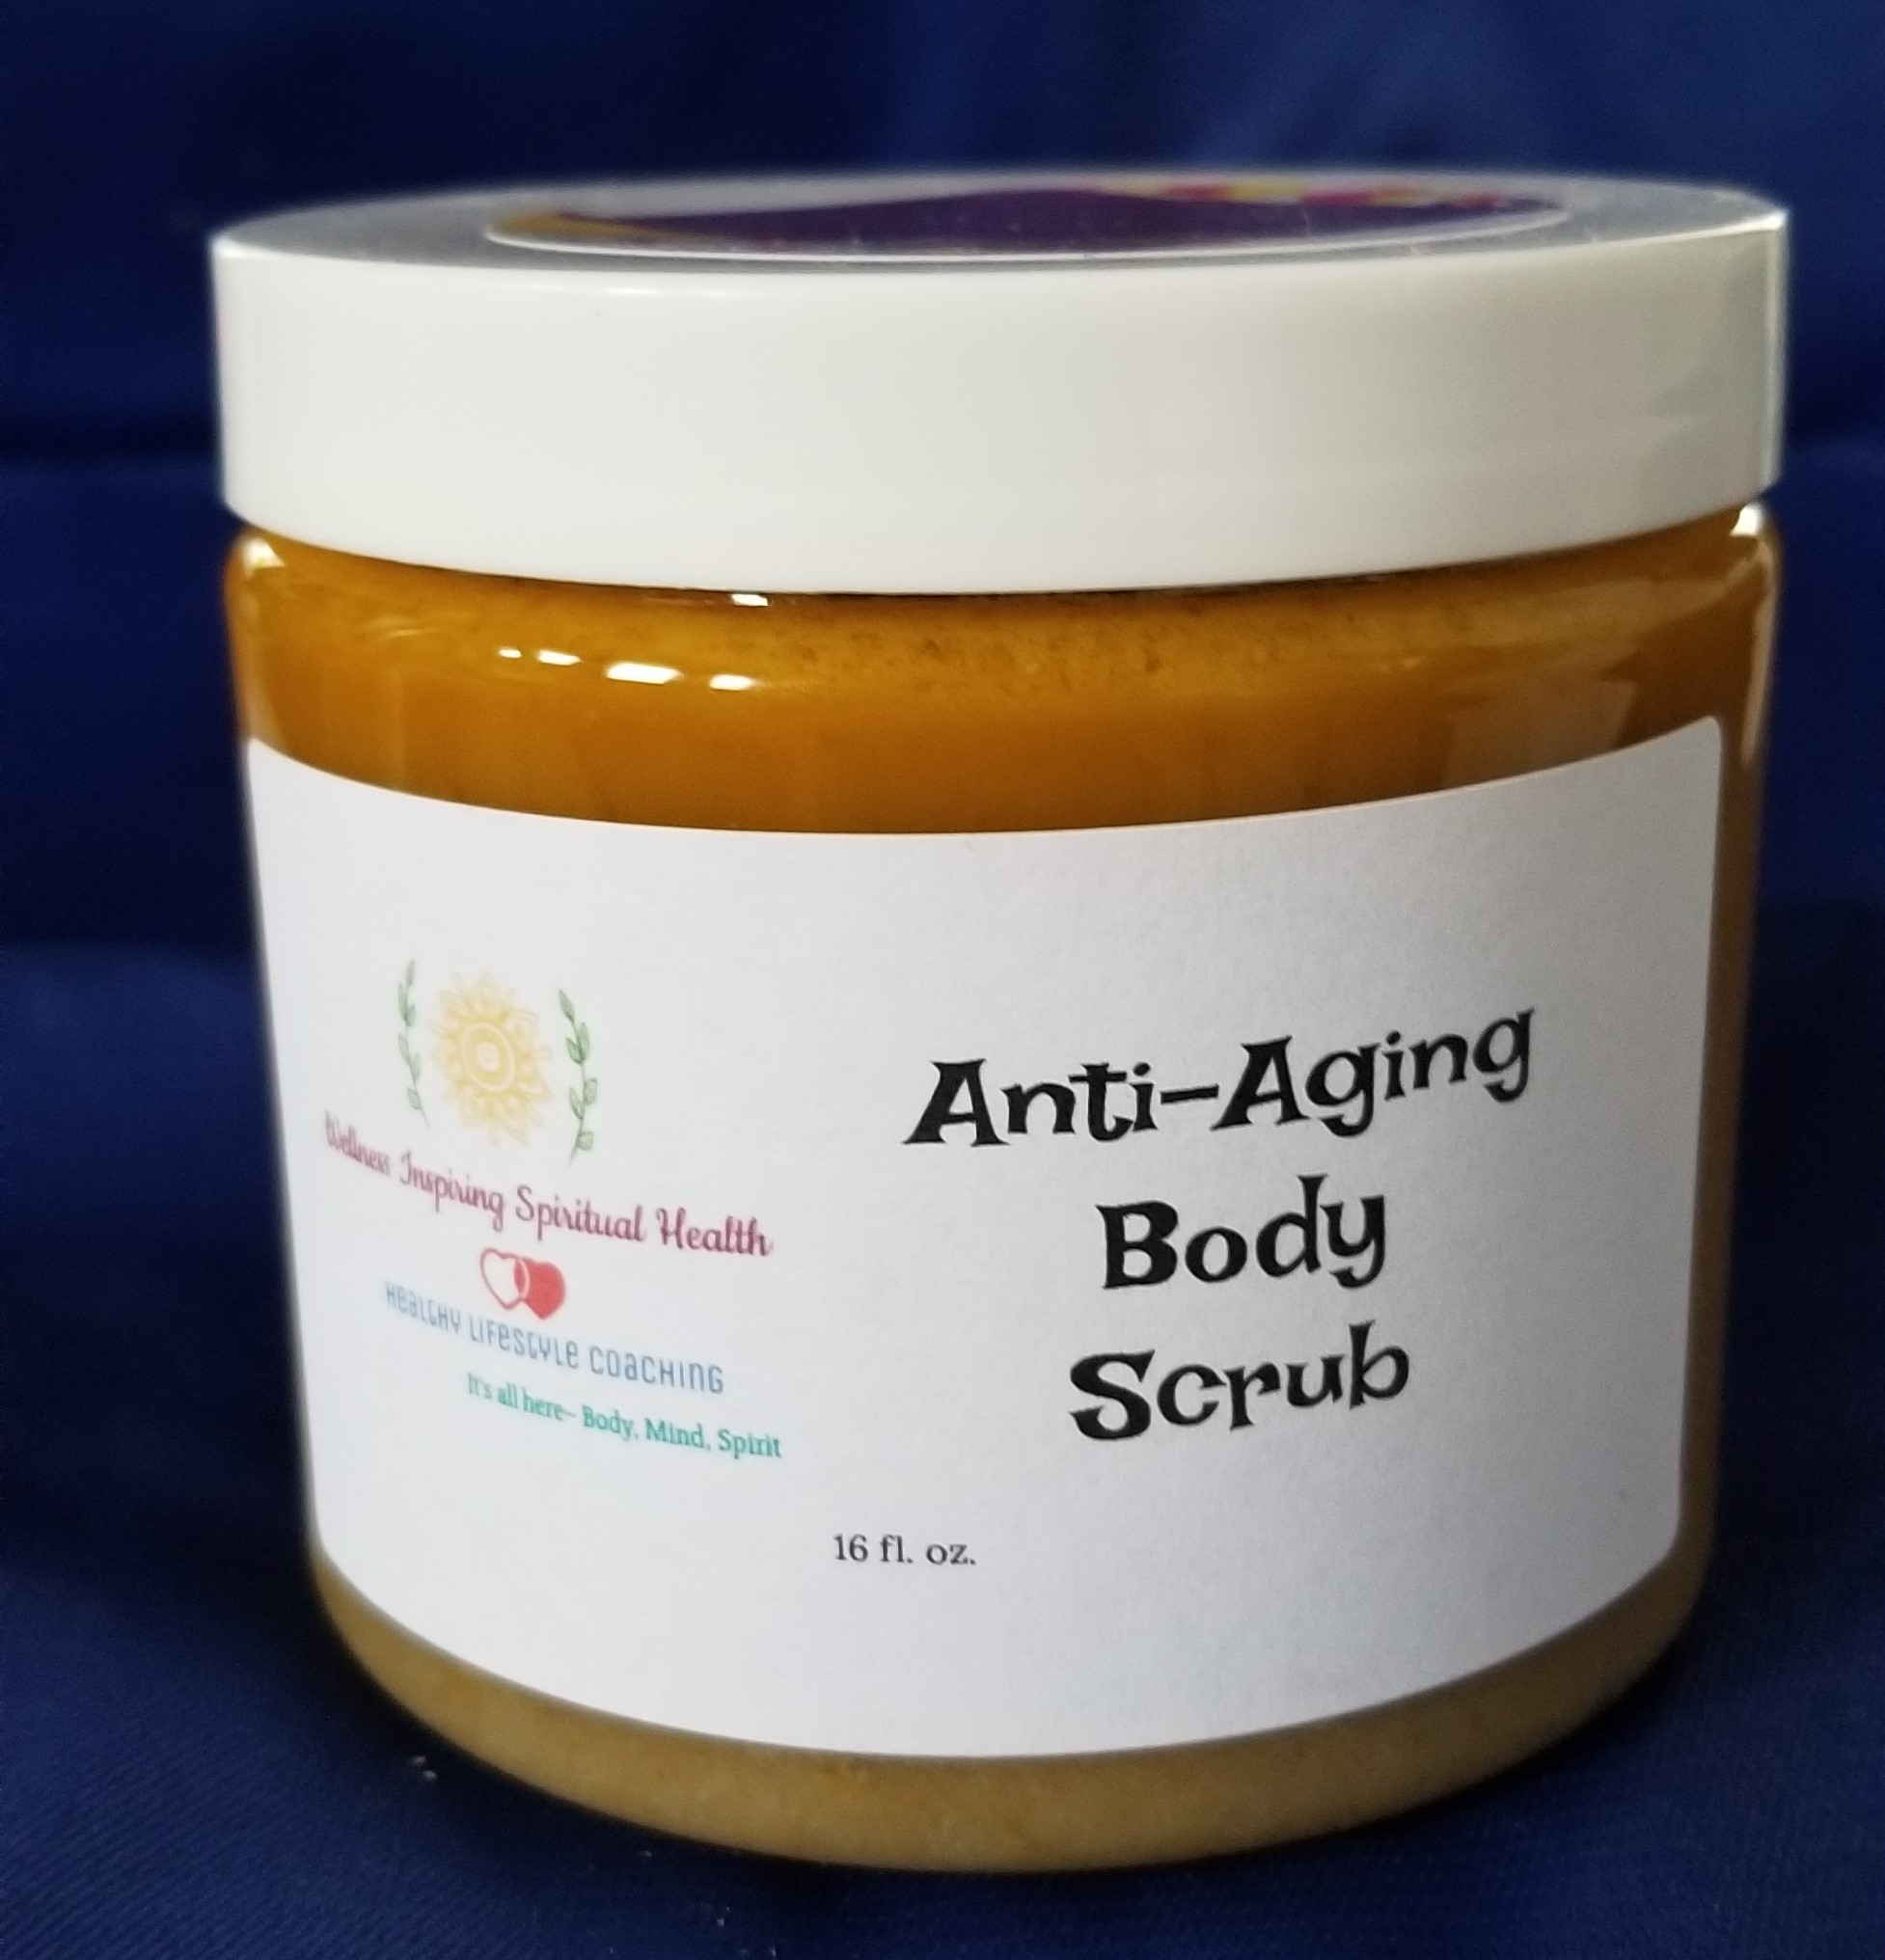 Anti-aging Body Scrub